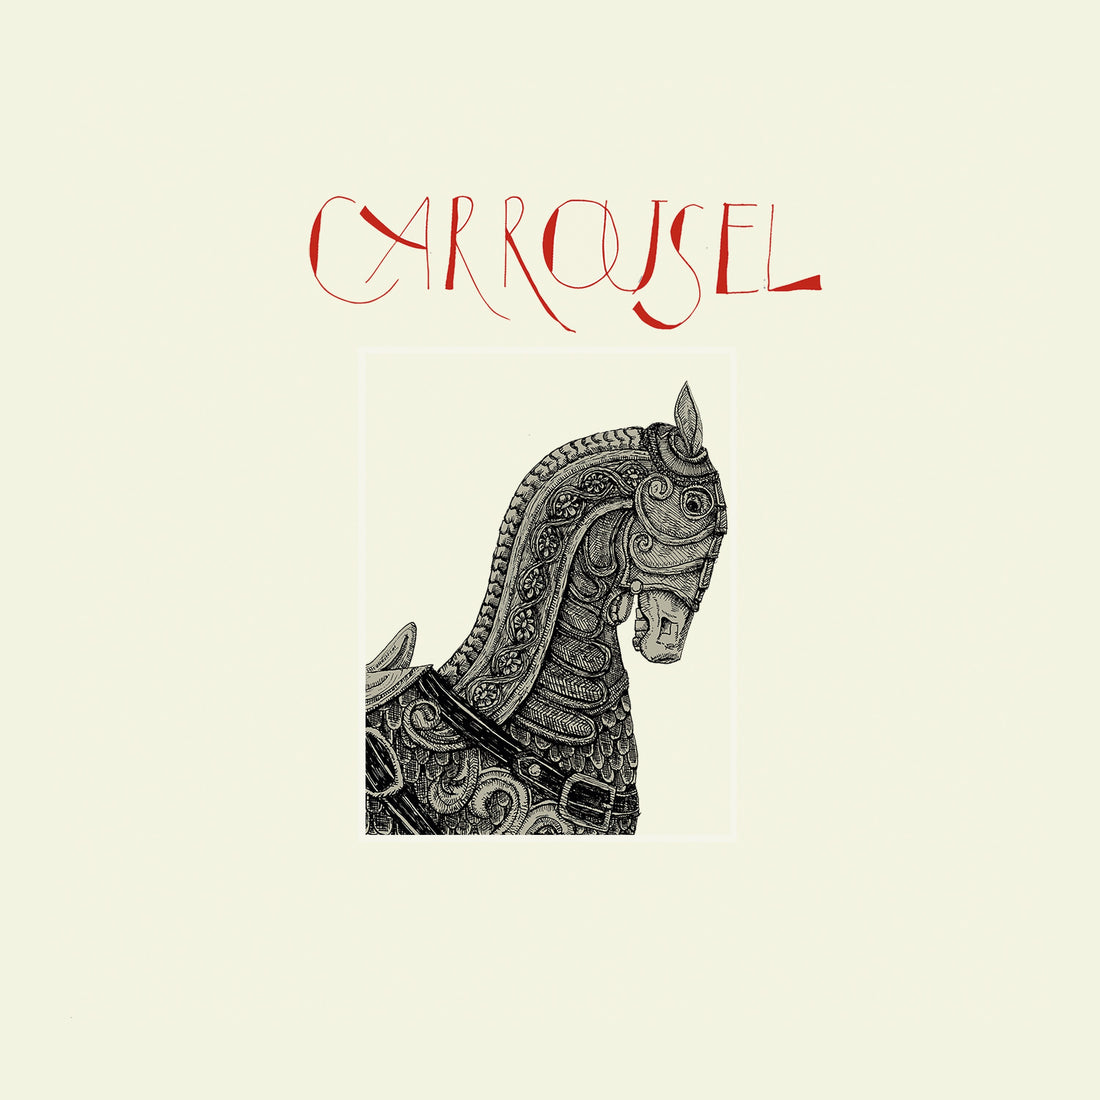 Carrousel (CD)